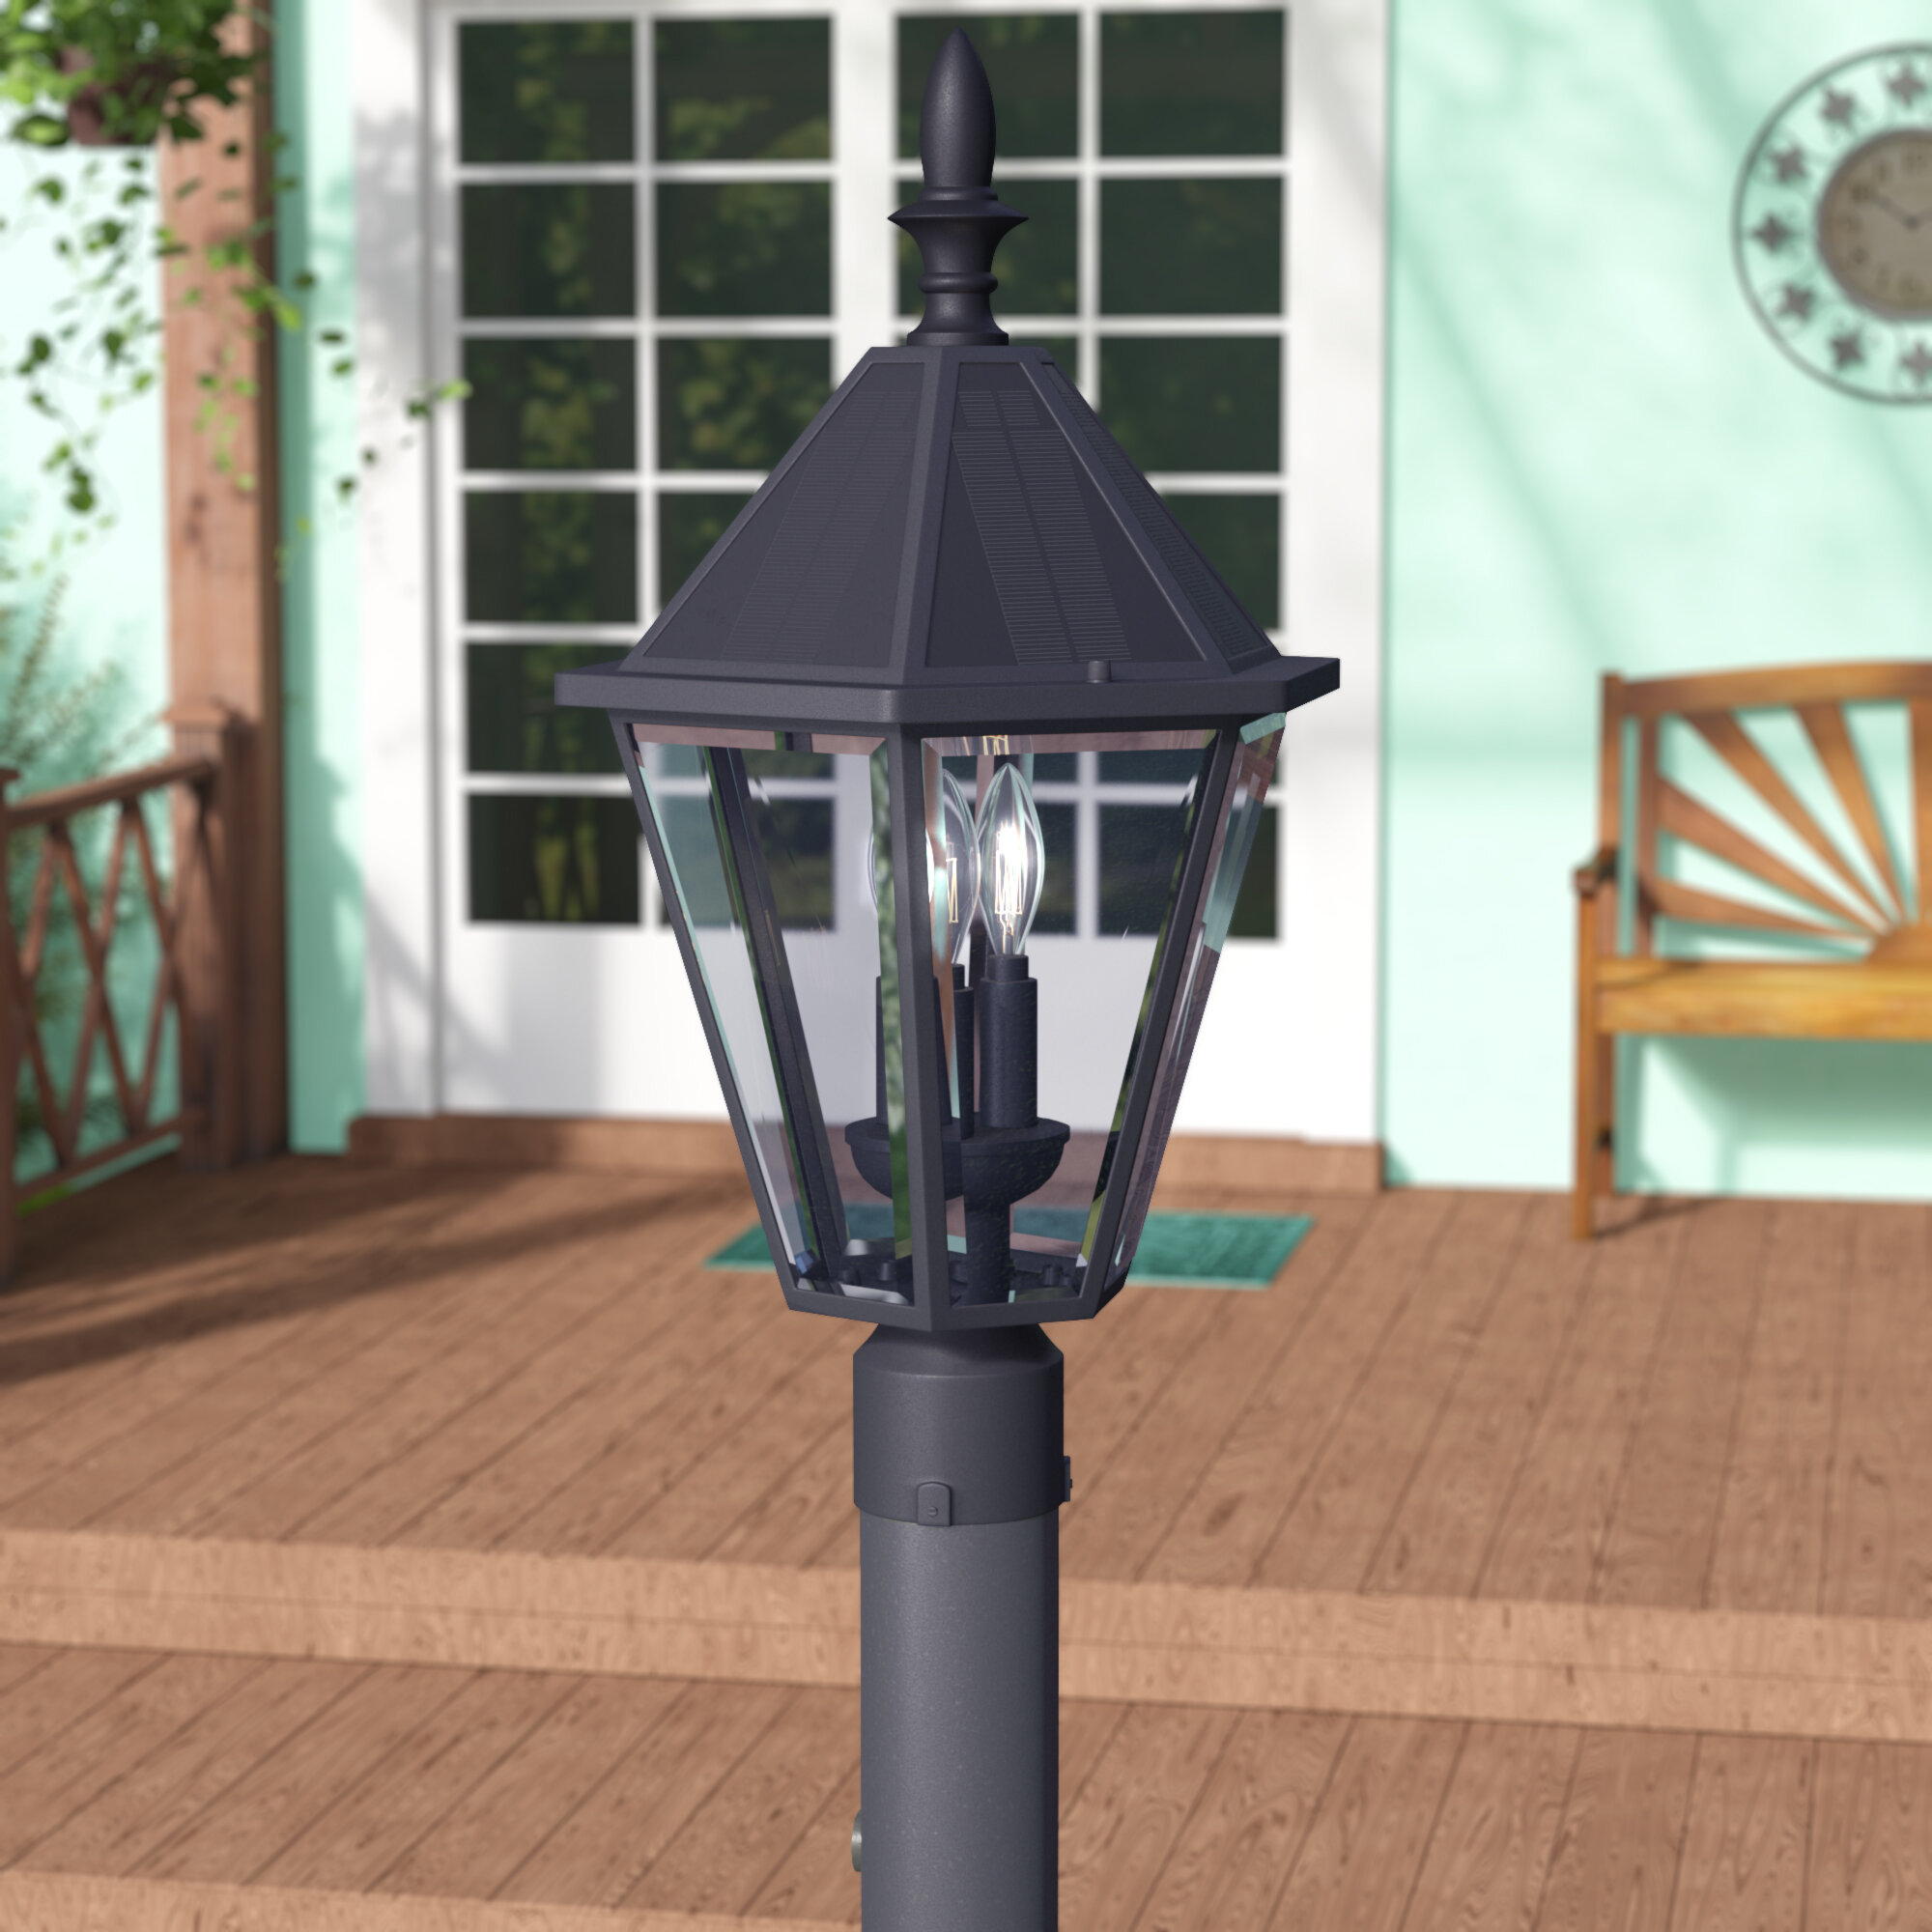 LED Solar Powered 5ft Traditional Garden Lamp Post Lamppost Decor Lantern Z4P9 